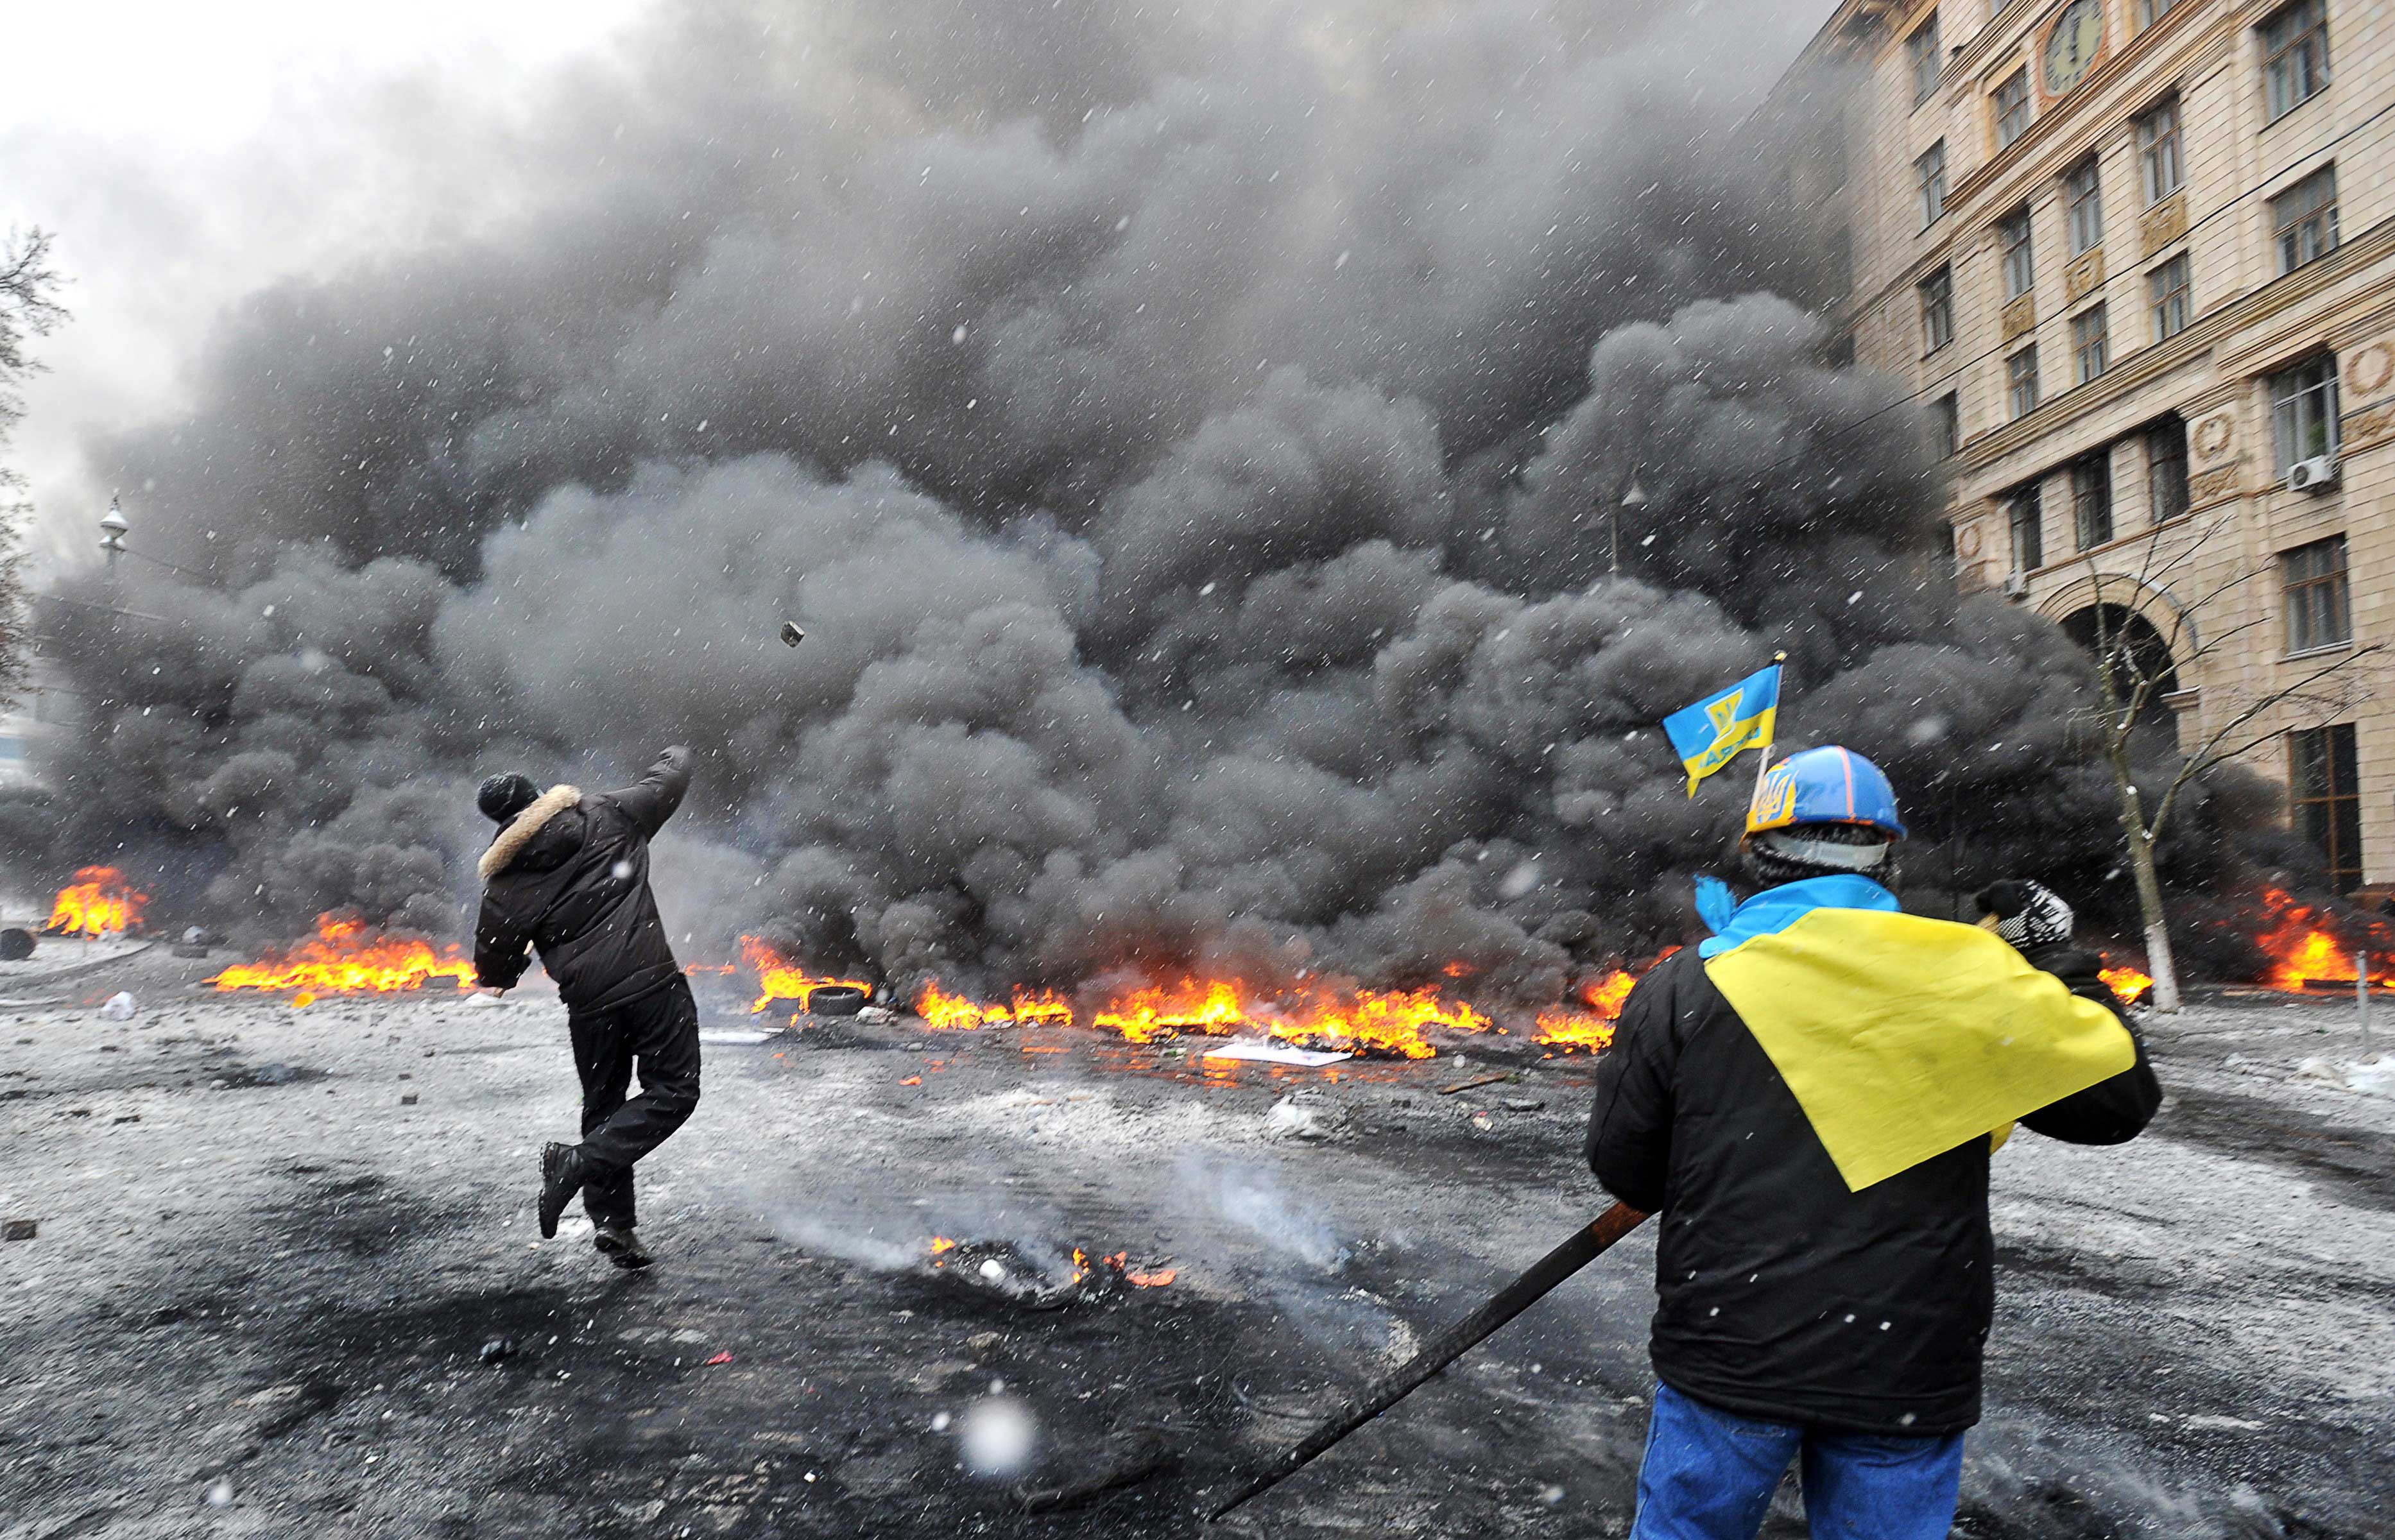 http://pixel.nymag.com/content/dam/daily/intelligencer/2014/01/22/ukraine-protests/22-ukraine-protests-05.jpg